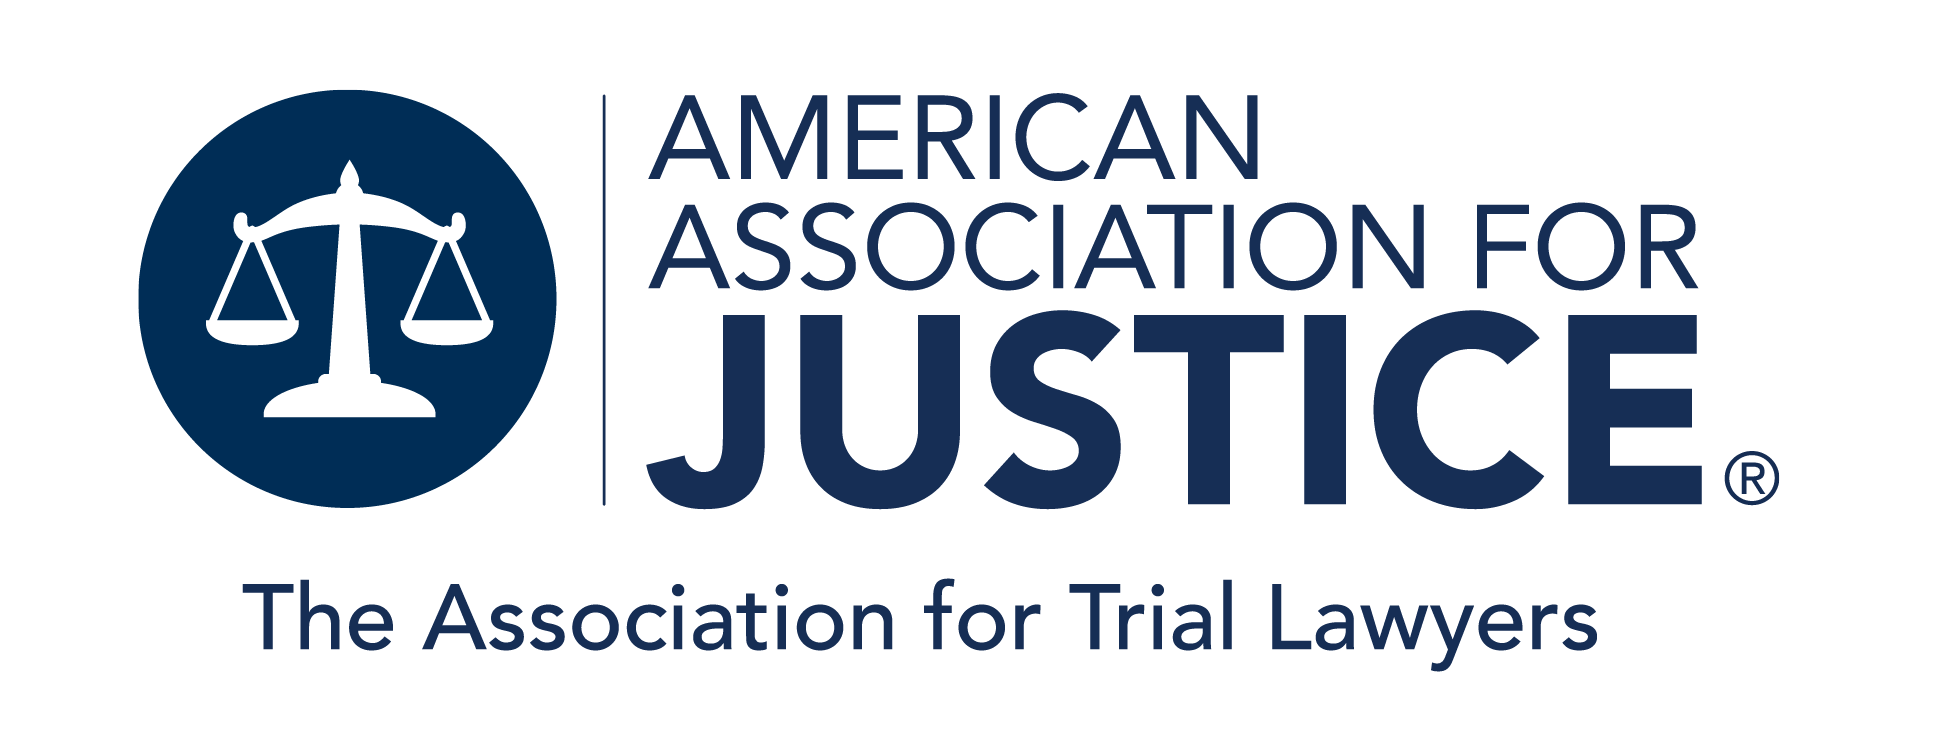 American Association or Justice Member